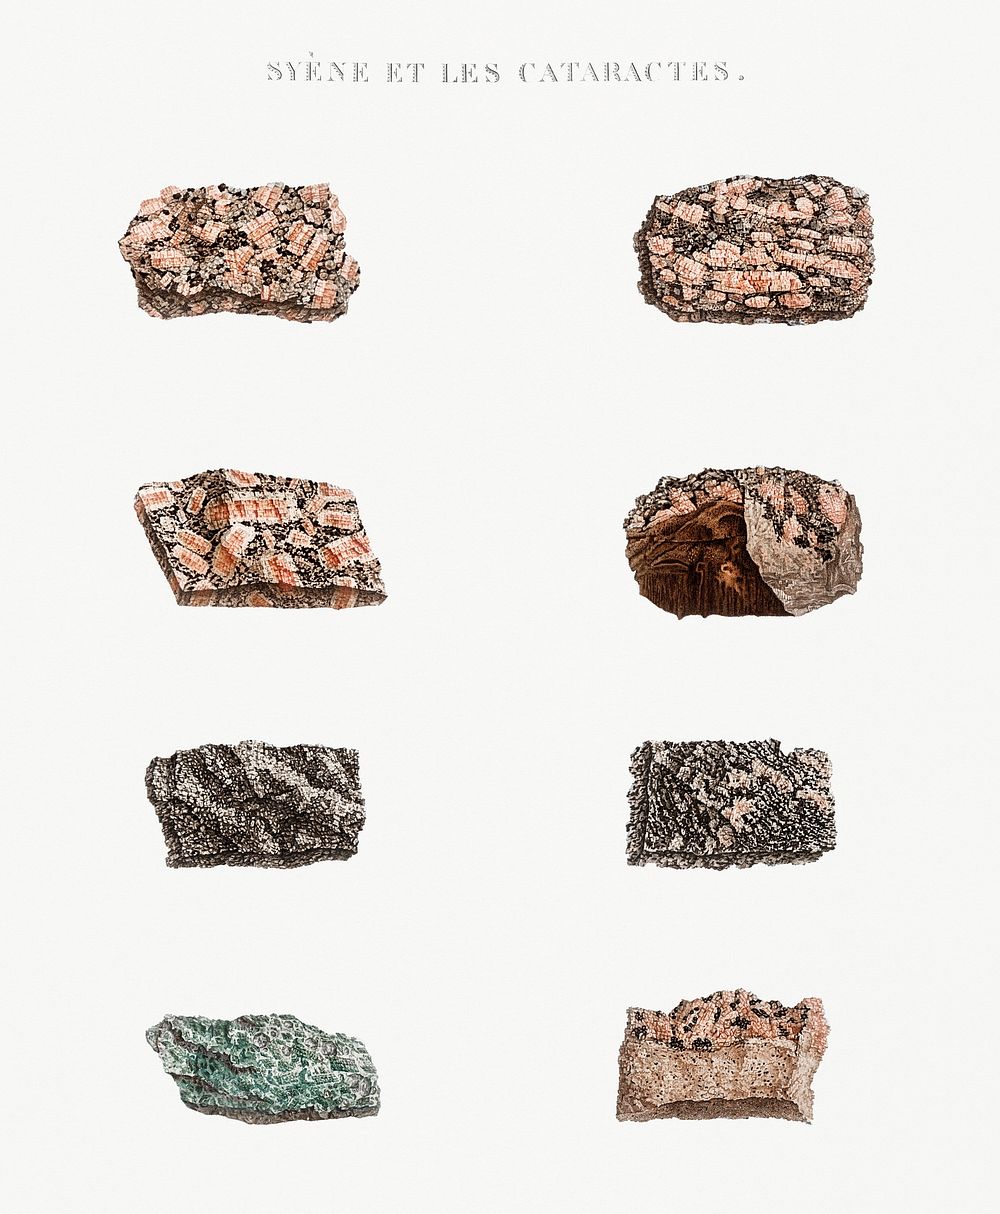 1-4.7. Varieties of eastern granite or syenite of the ancients 5.6.8. Various primitive rocks illustrated by Edme…